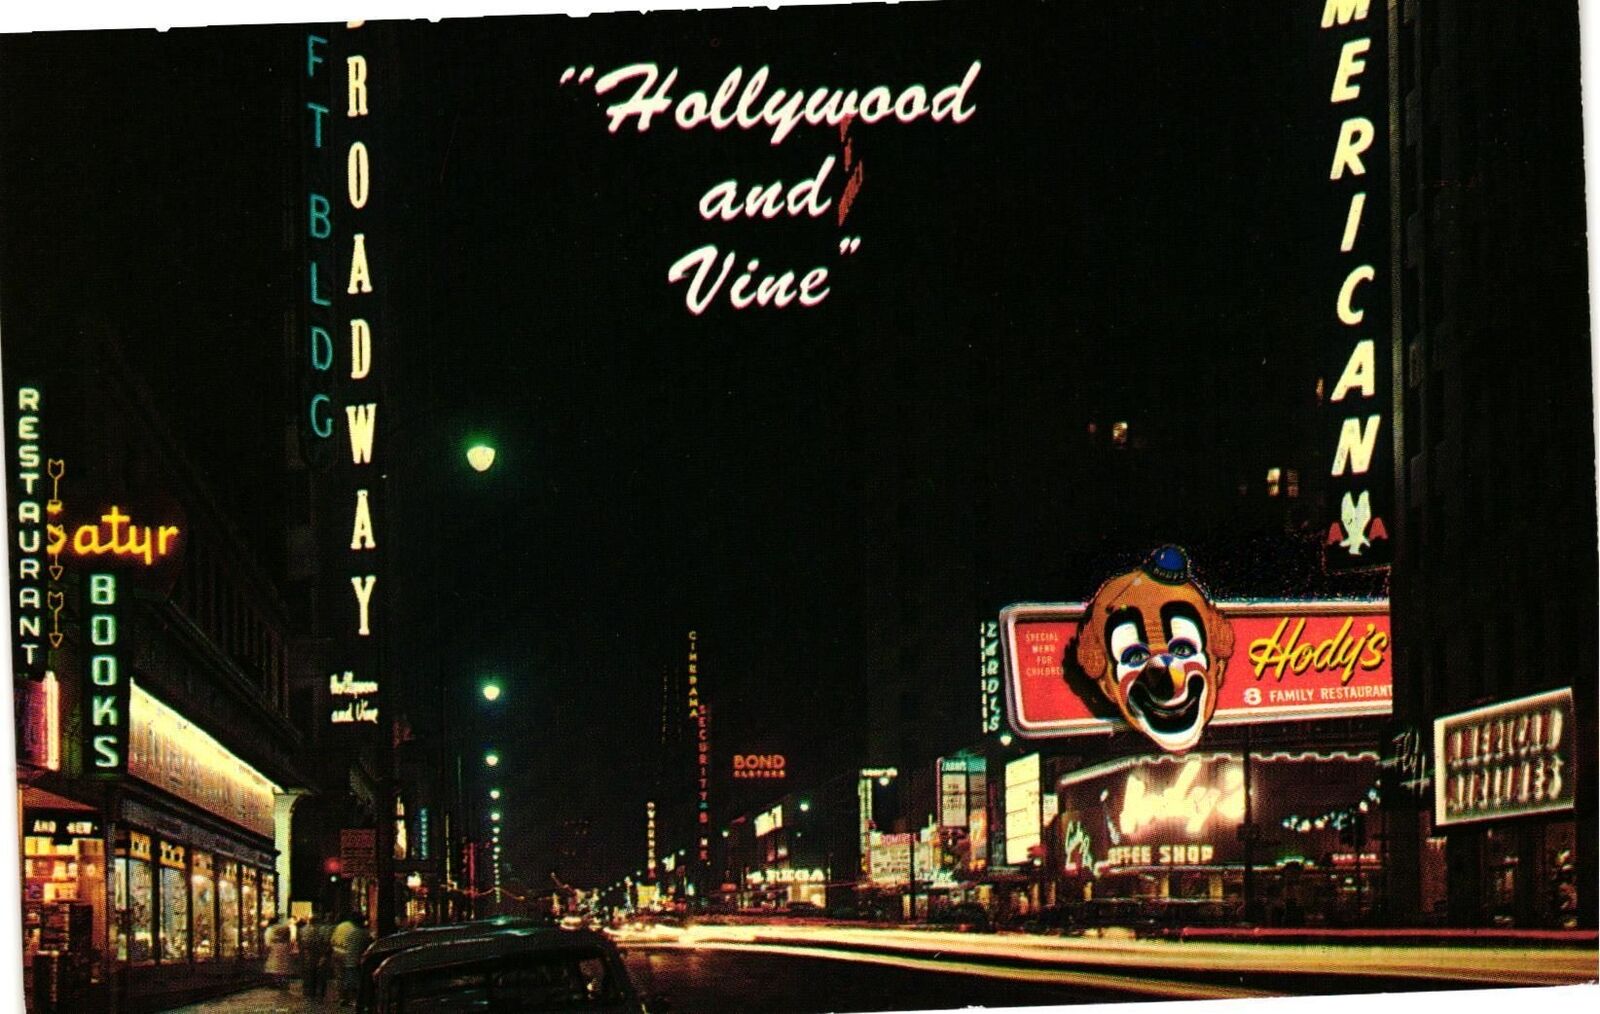 VTG Postcard- P41141. Hollywood Blvd at Vine Street, Hollywood, C. Unused 1963